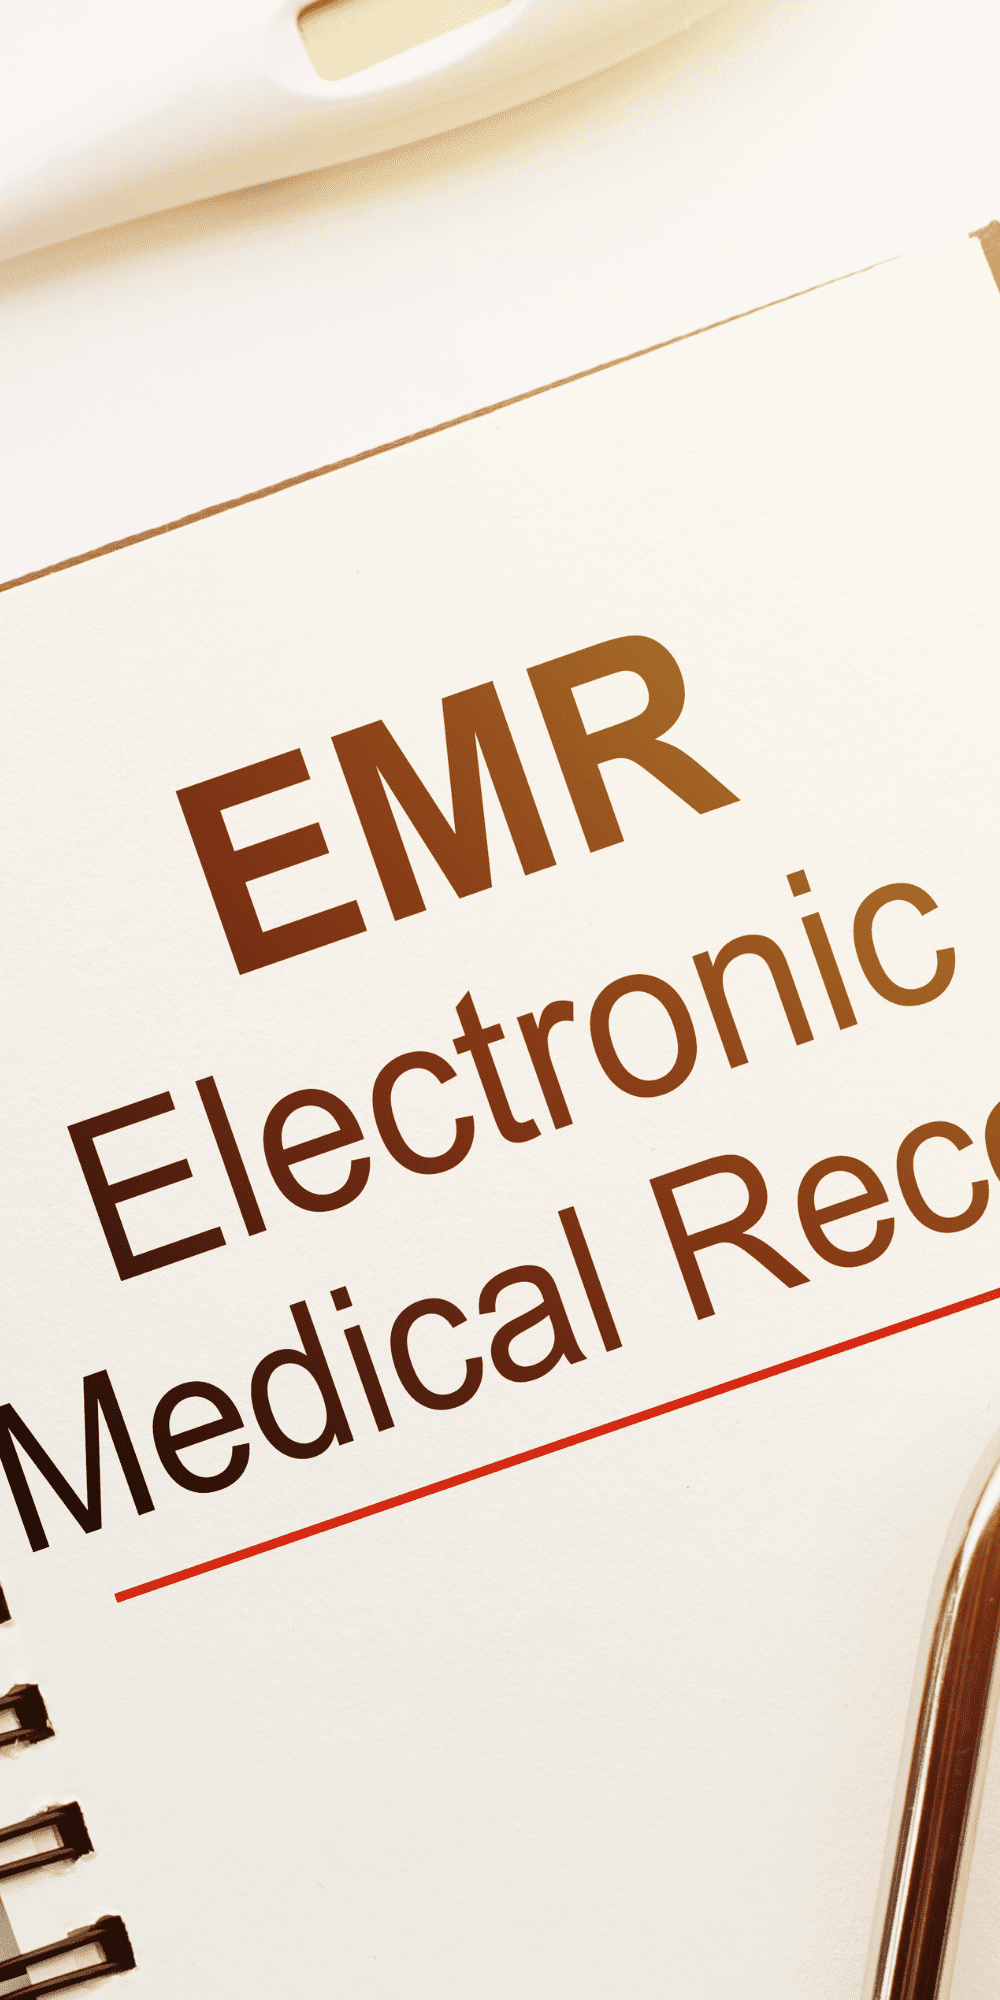 Popular Electronic Medical Records - EMR